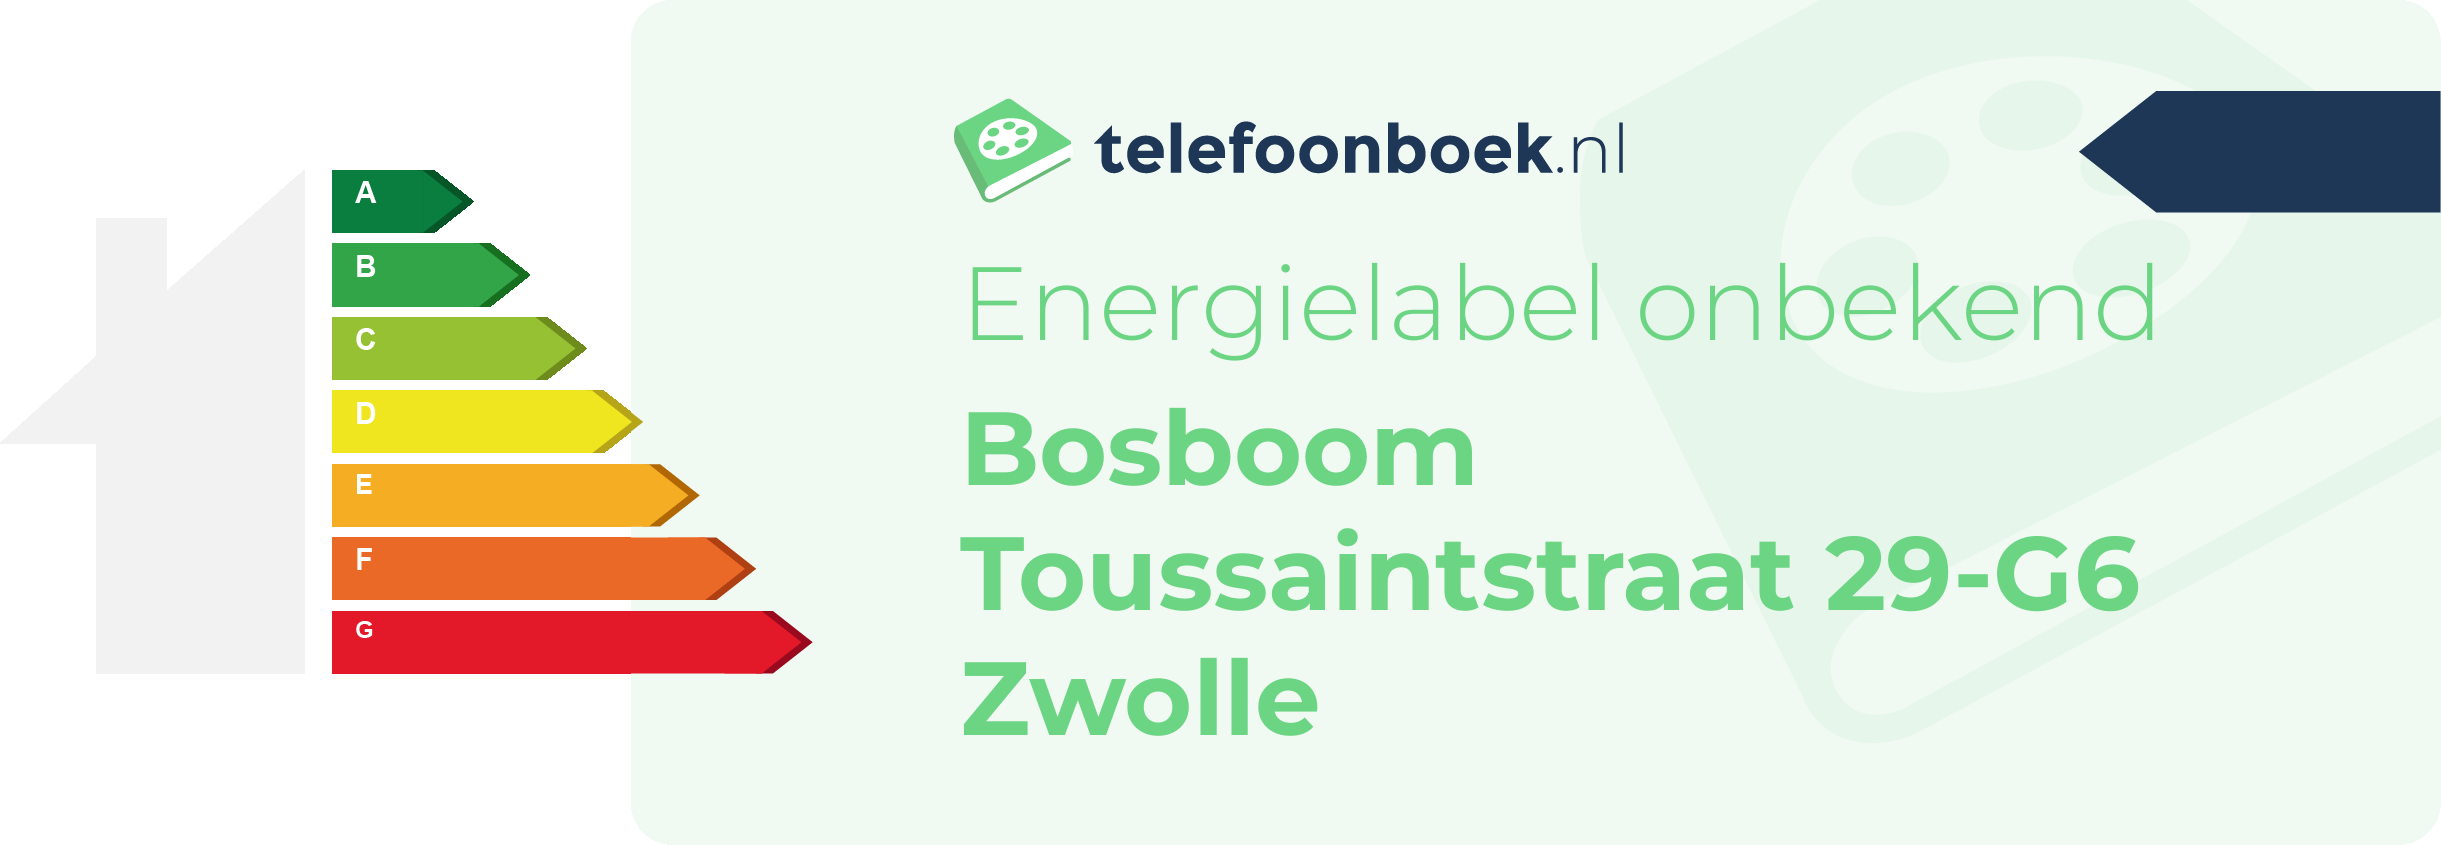 Energielabel Bosboom Toussaintstraat 29-G6 Zwolle